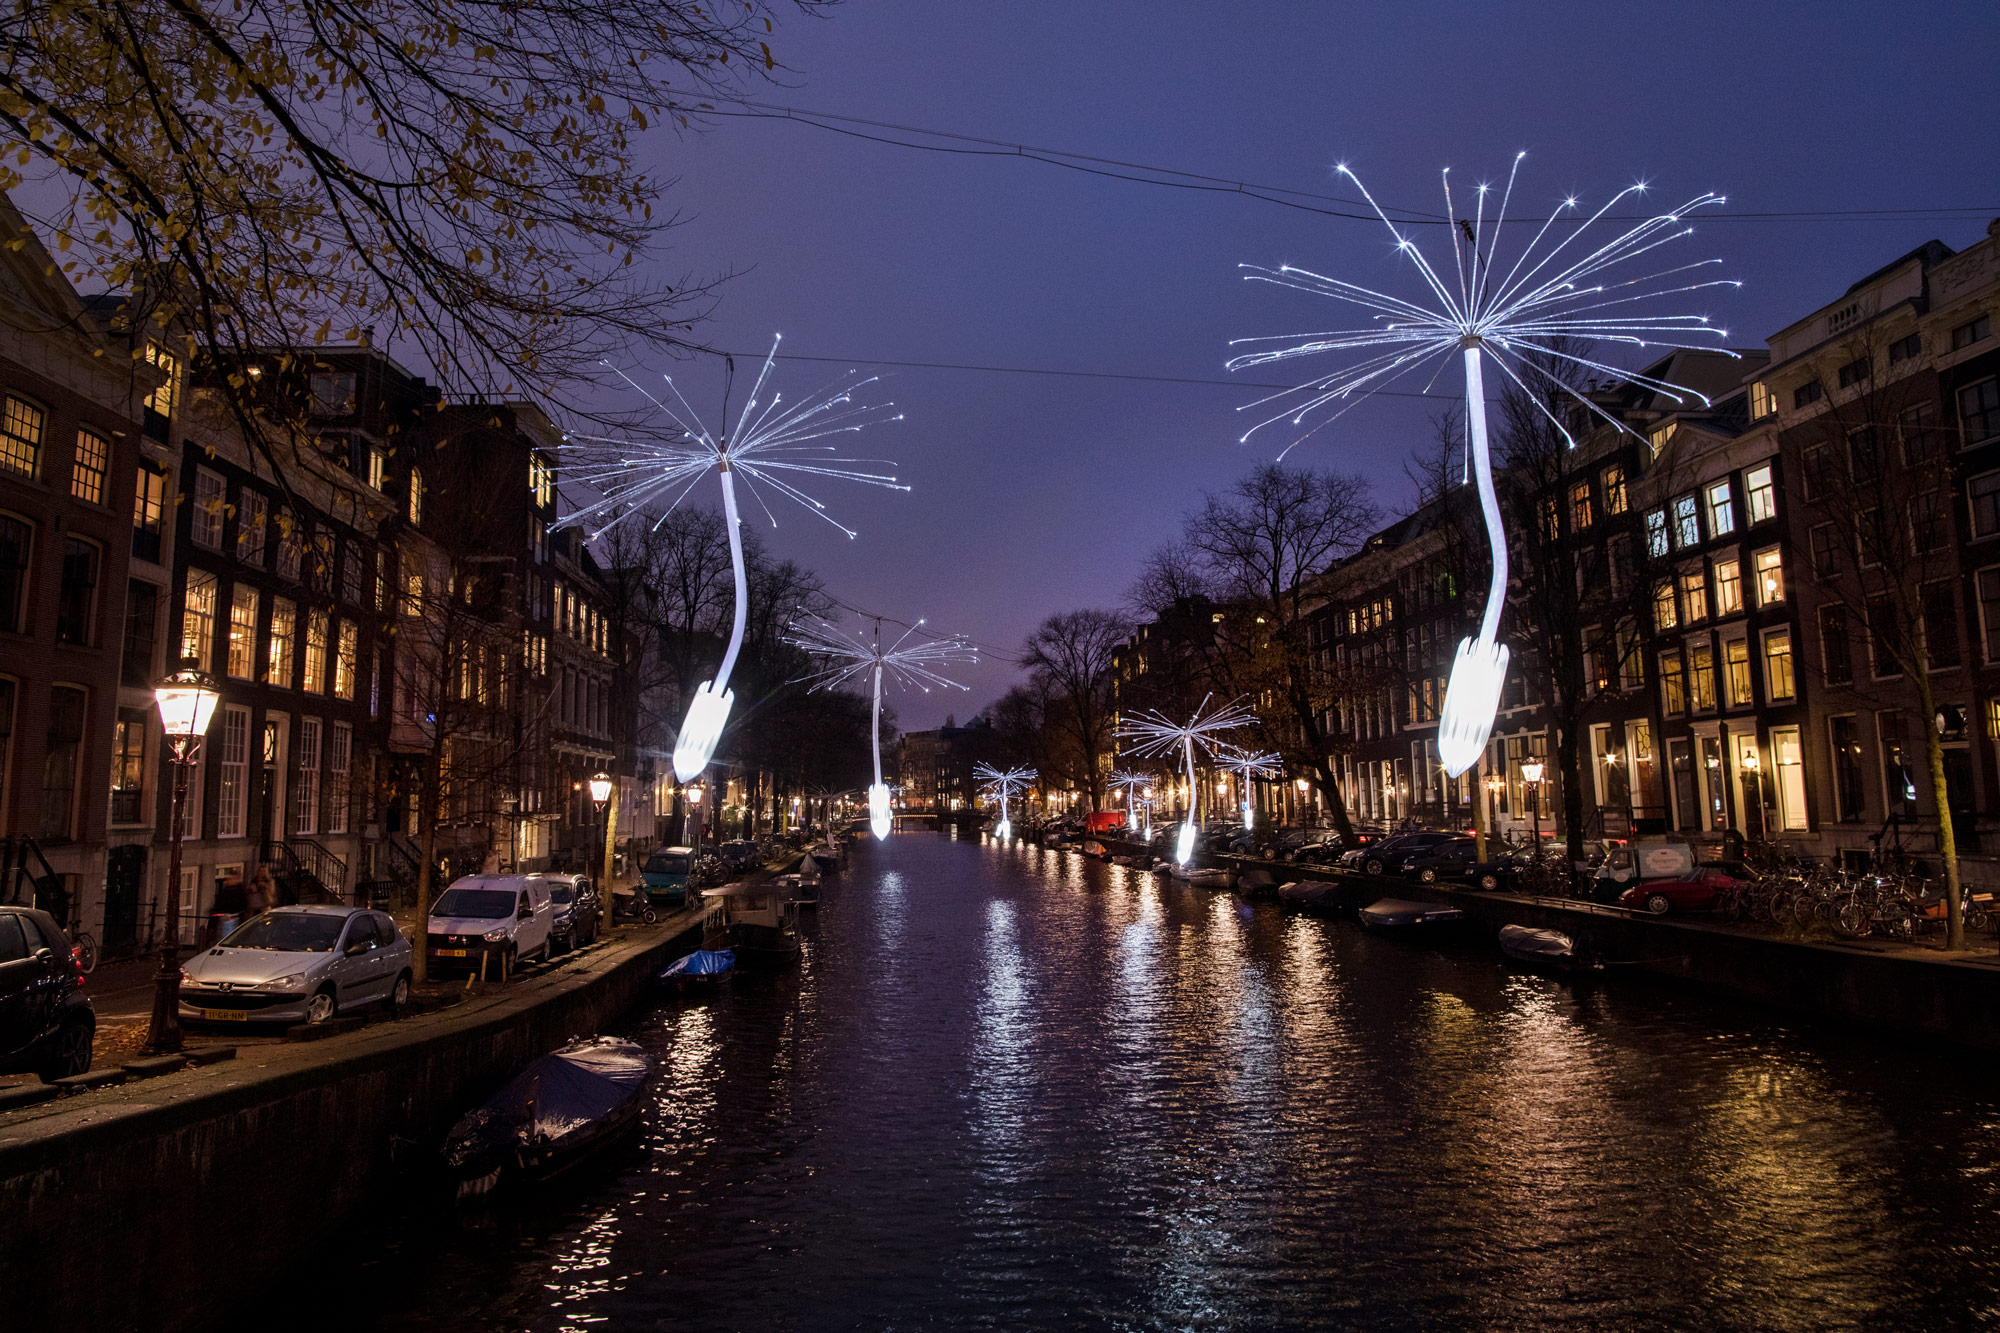 Amsterdam Light Festival - Light a Wisj